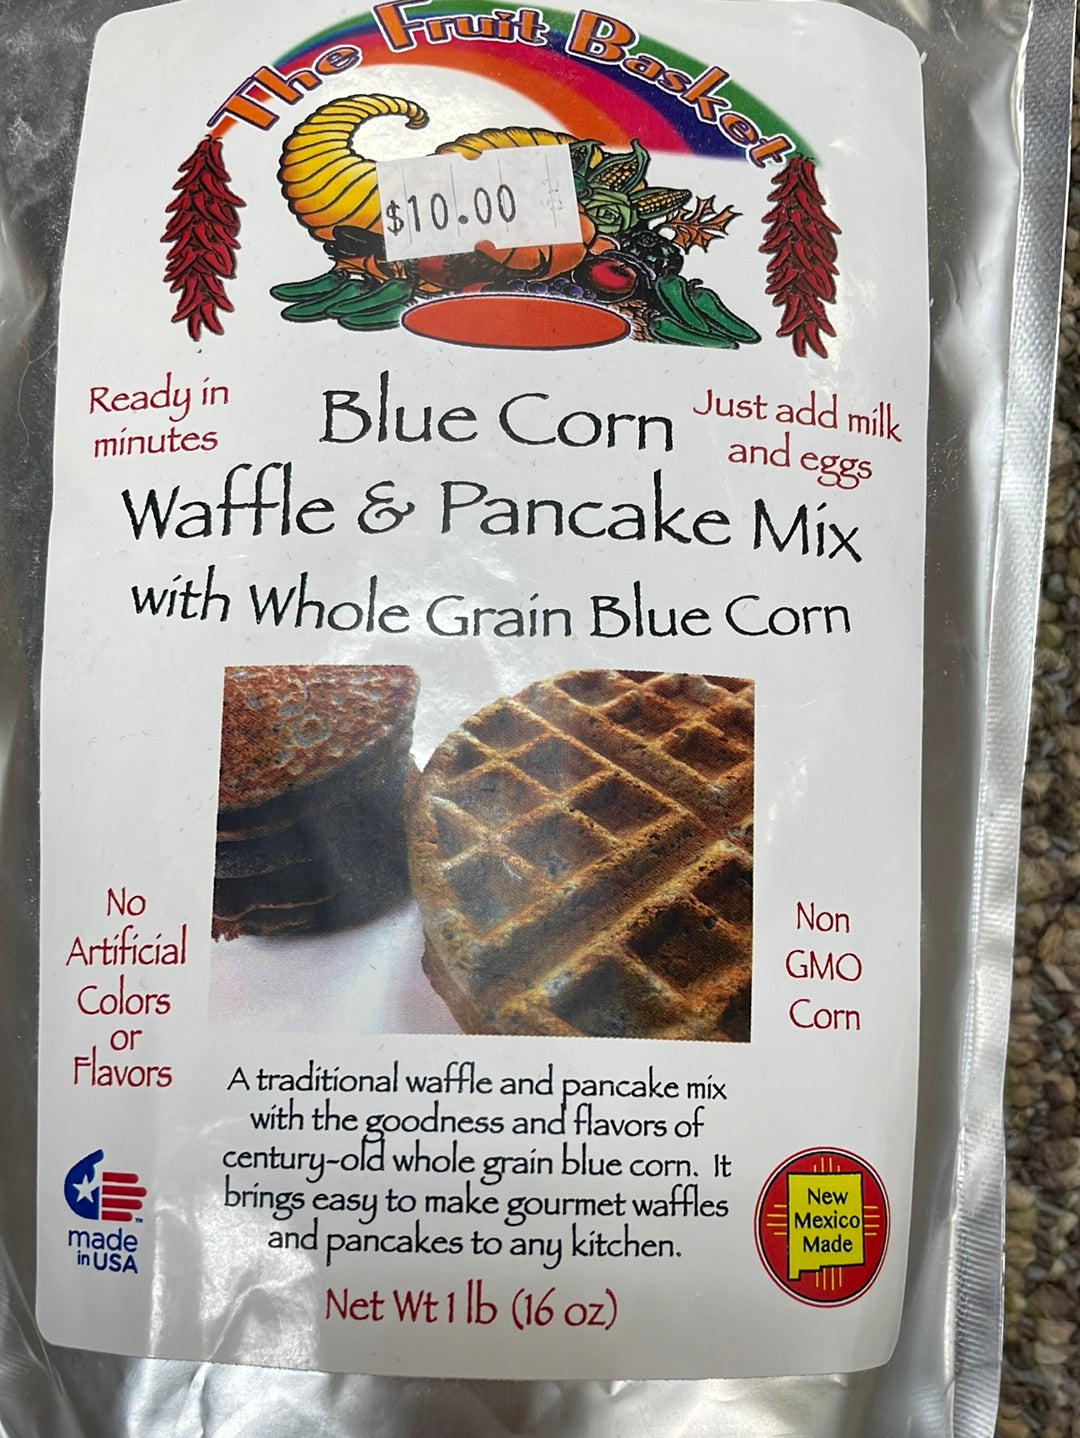 Blue Corn Waffle & Pancake Mix with whole grain blue corn